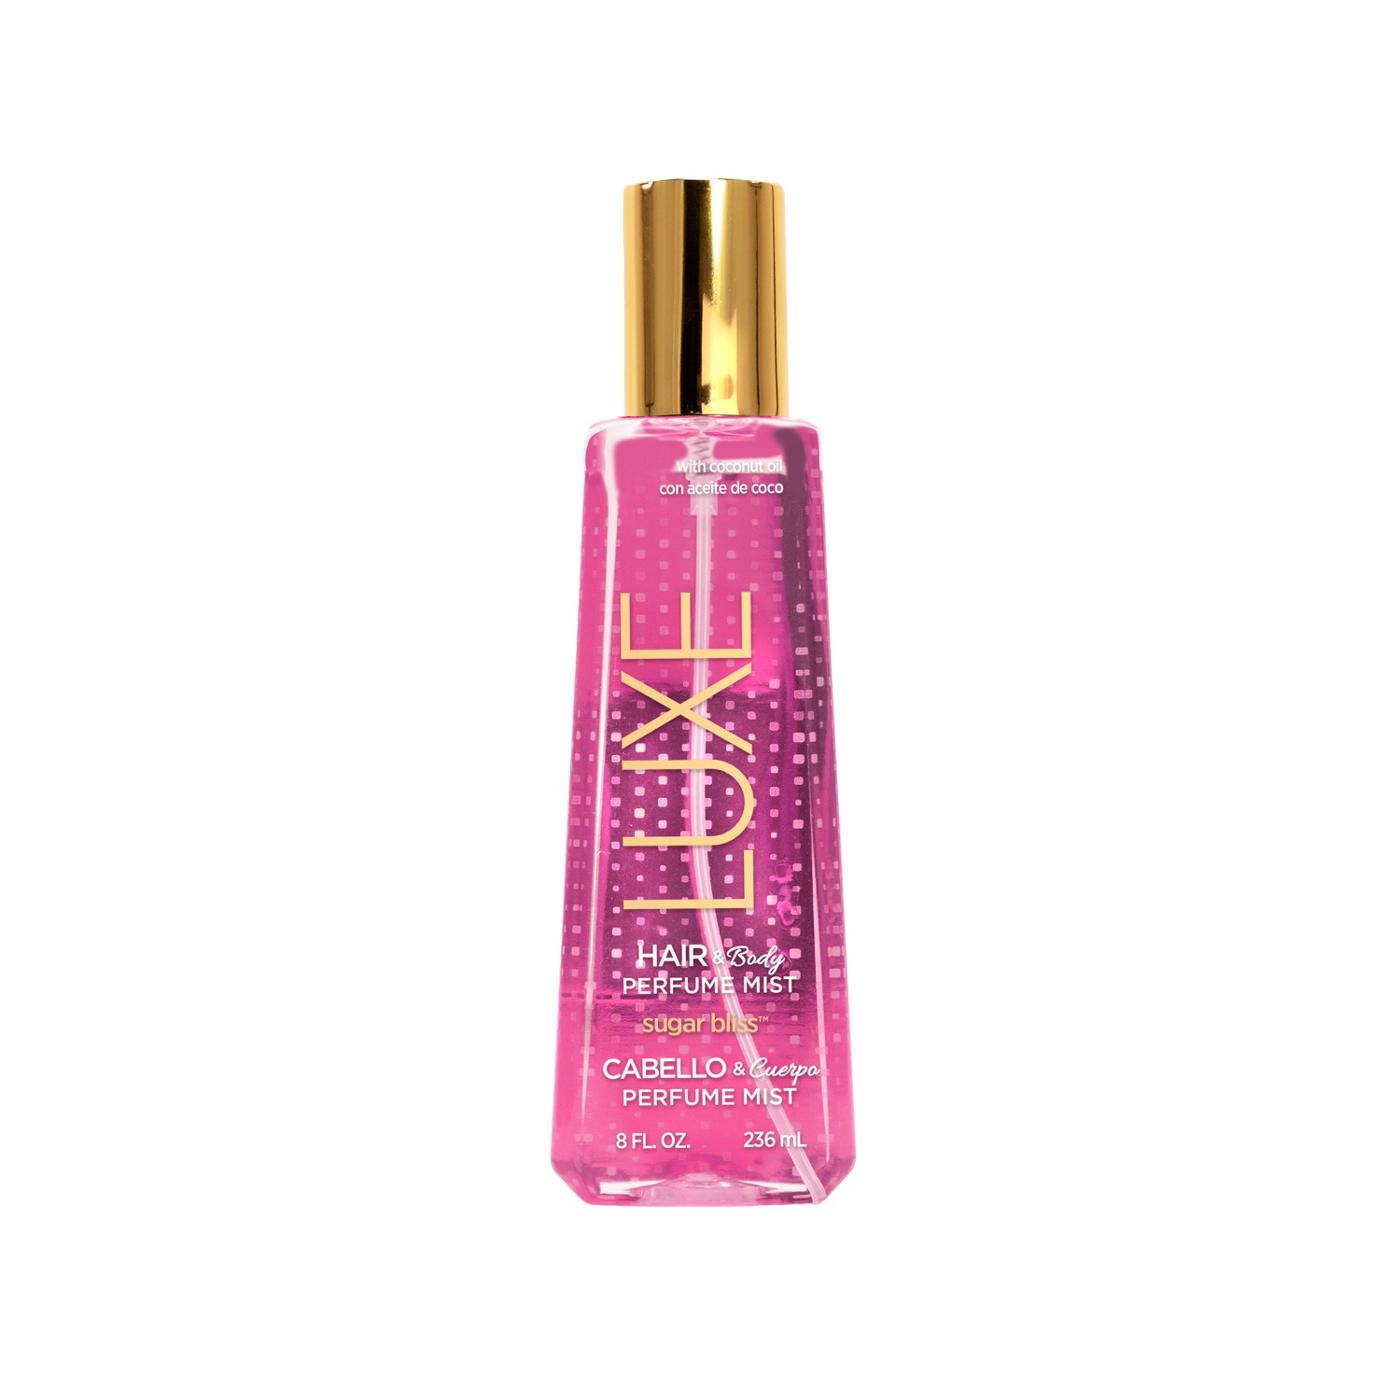 Luxe Perfume Hair & Body Perfume Mist - Sugar Bliss; image 1 of 3